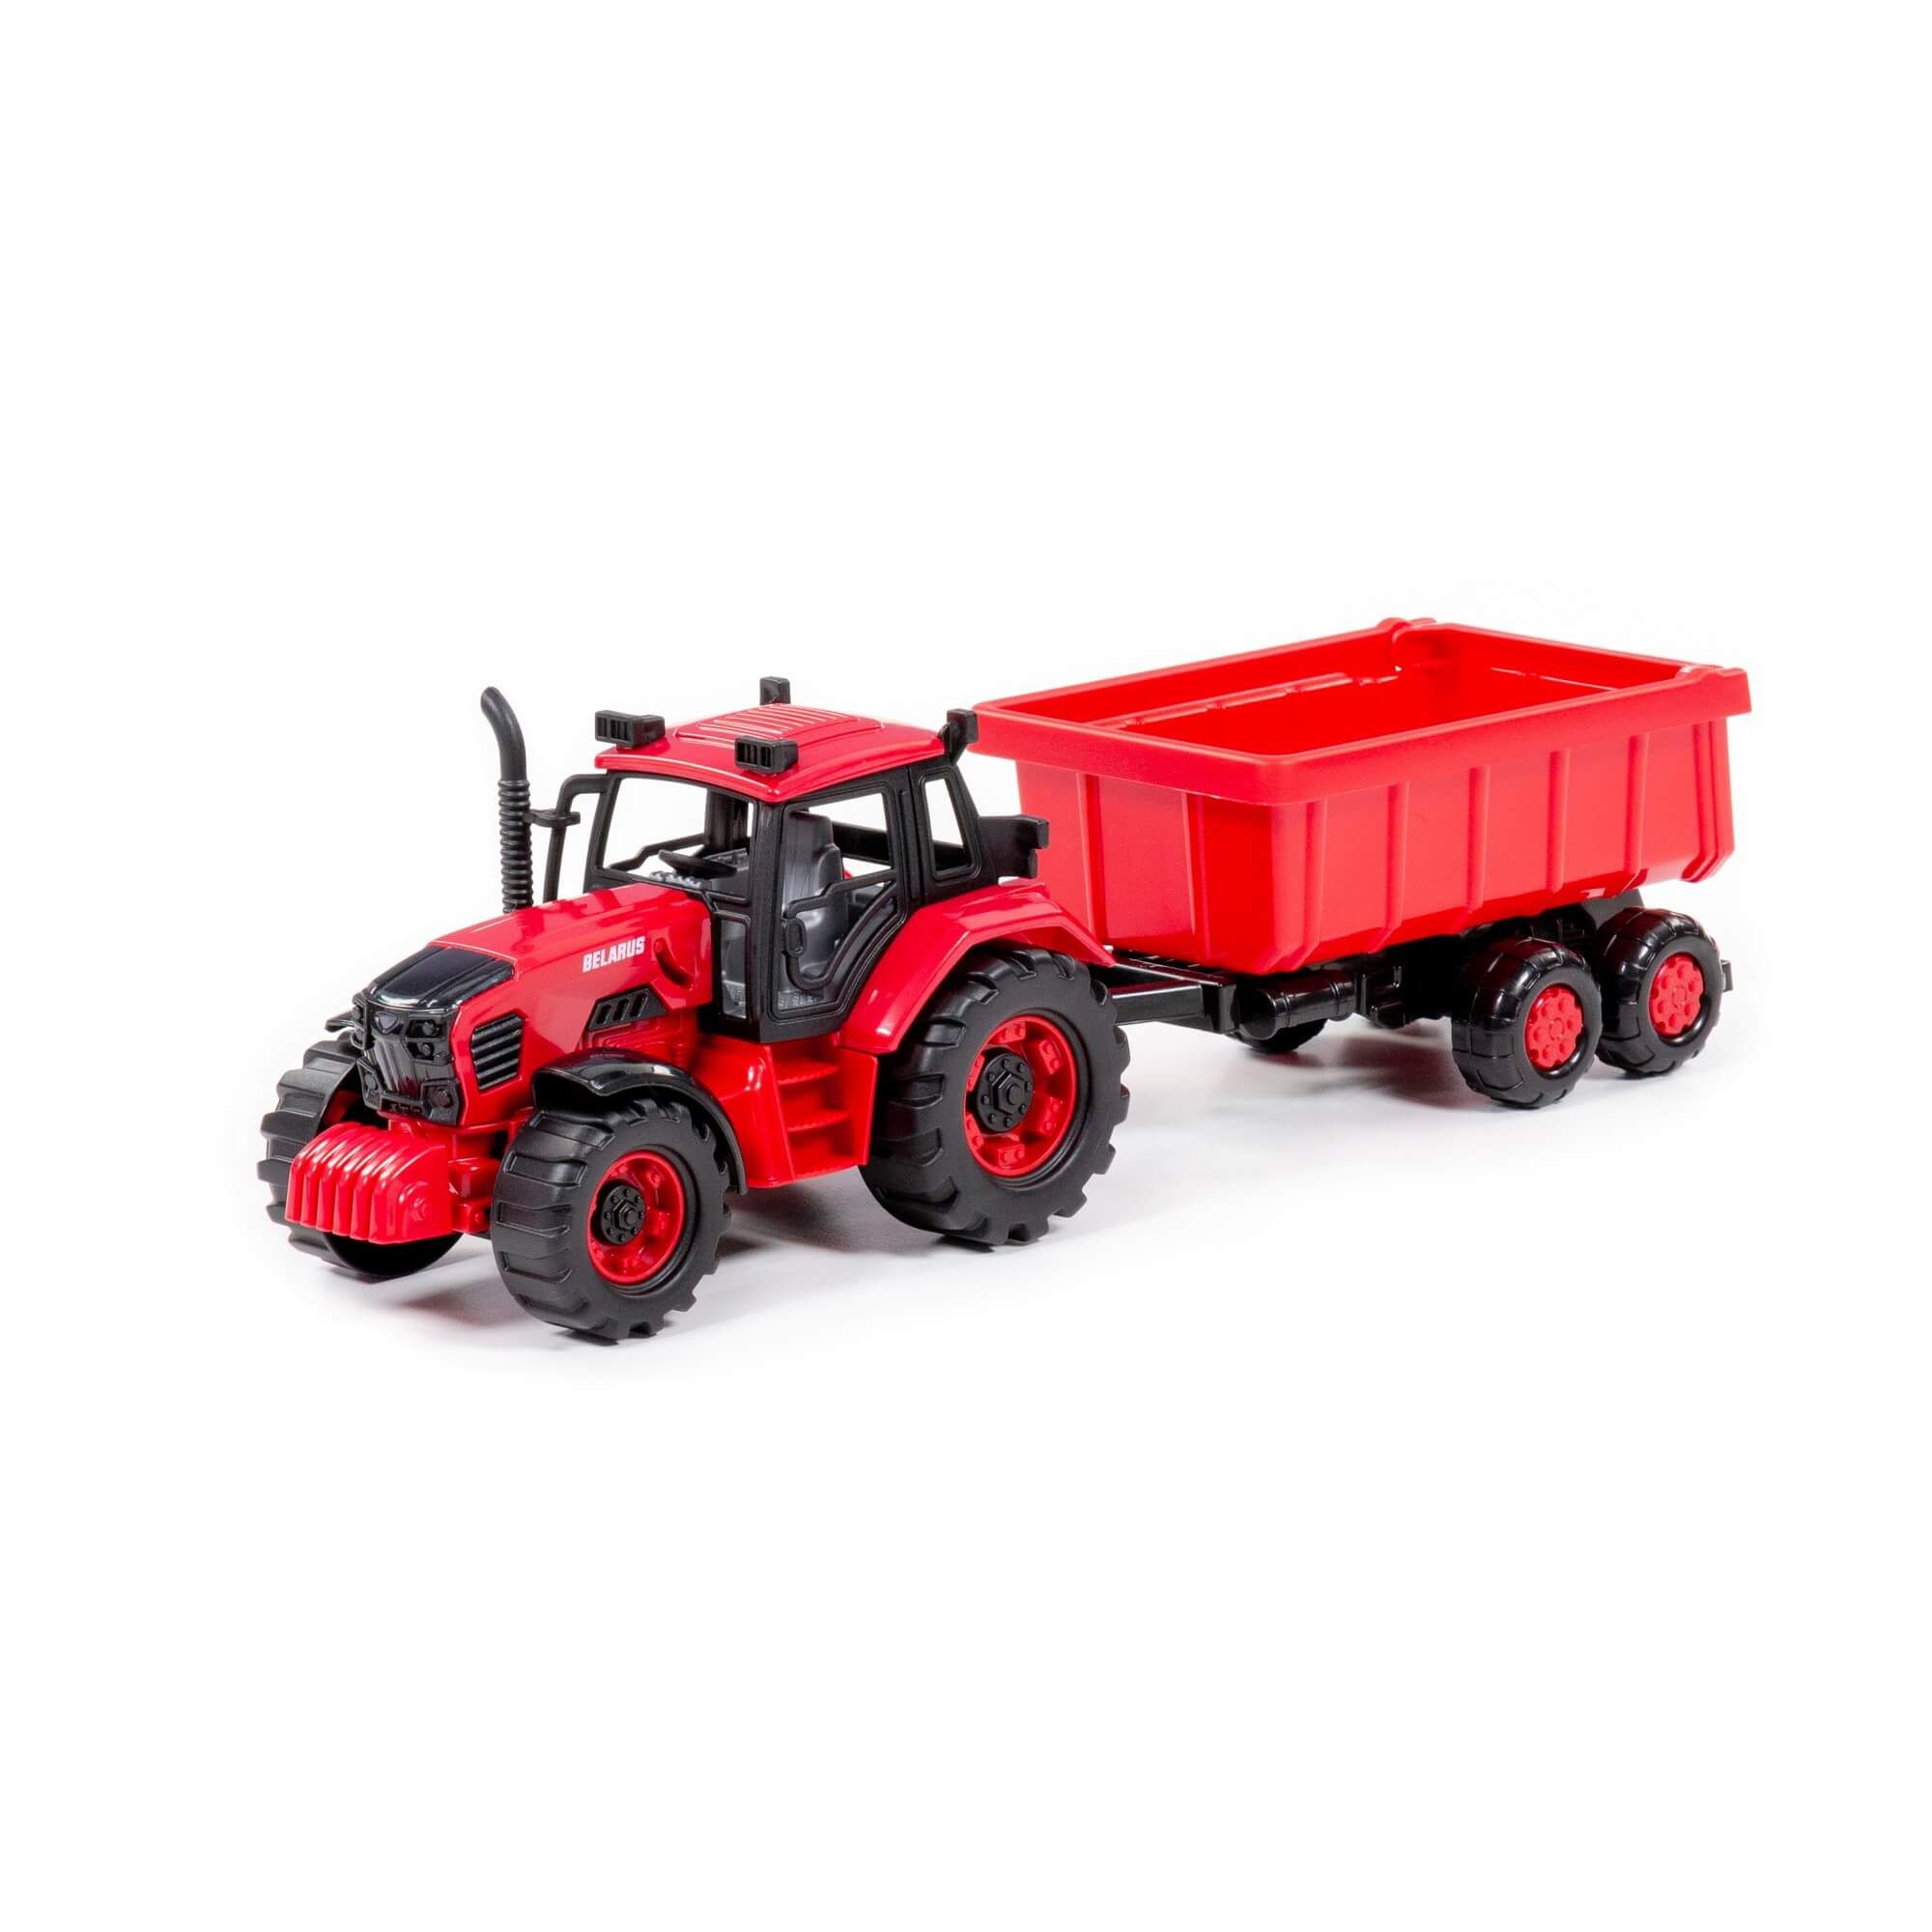 Трактор Belarus с прицепом (в коробке) 91321 игрушка трактор c прицепом цвета микс